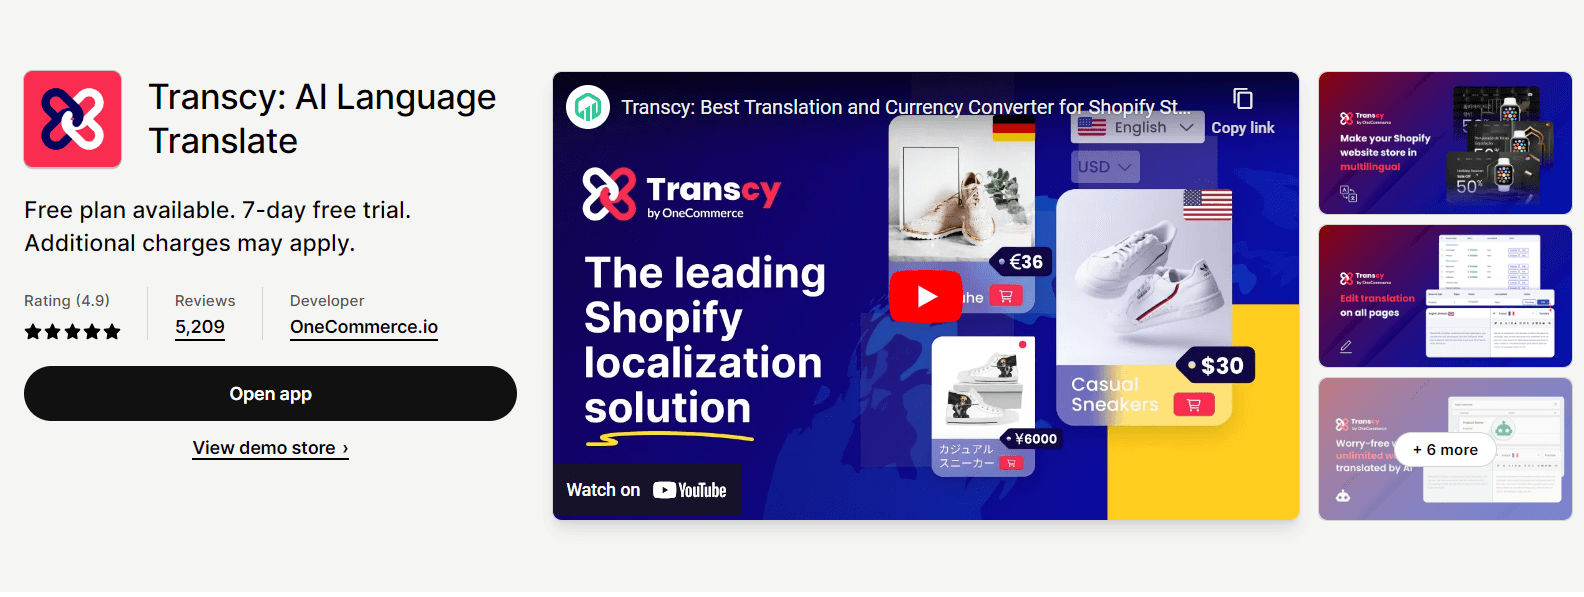 Install Transcy from Shopify App Store